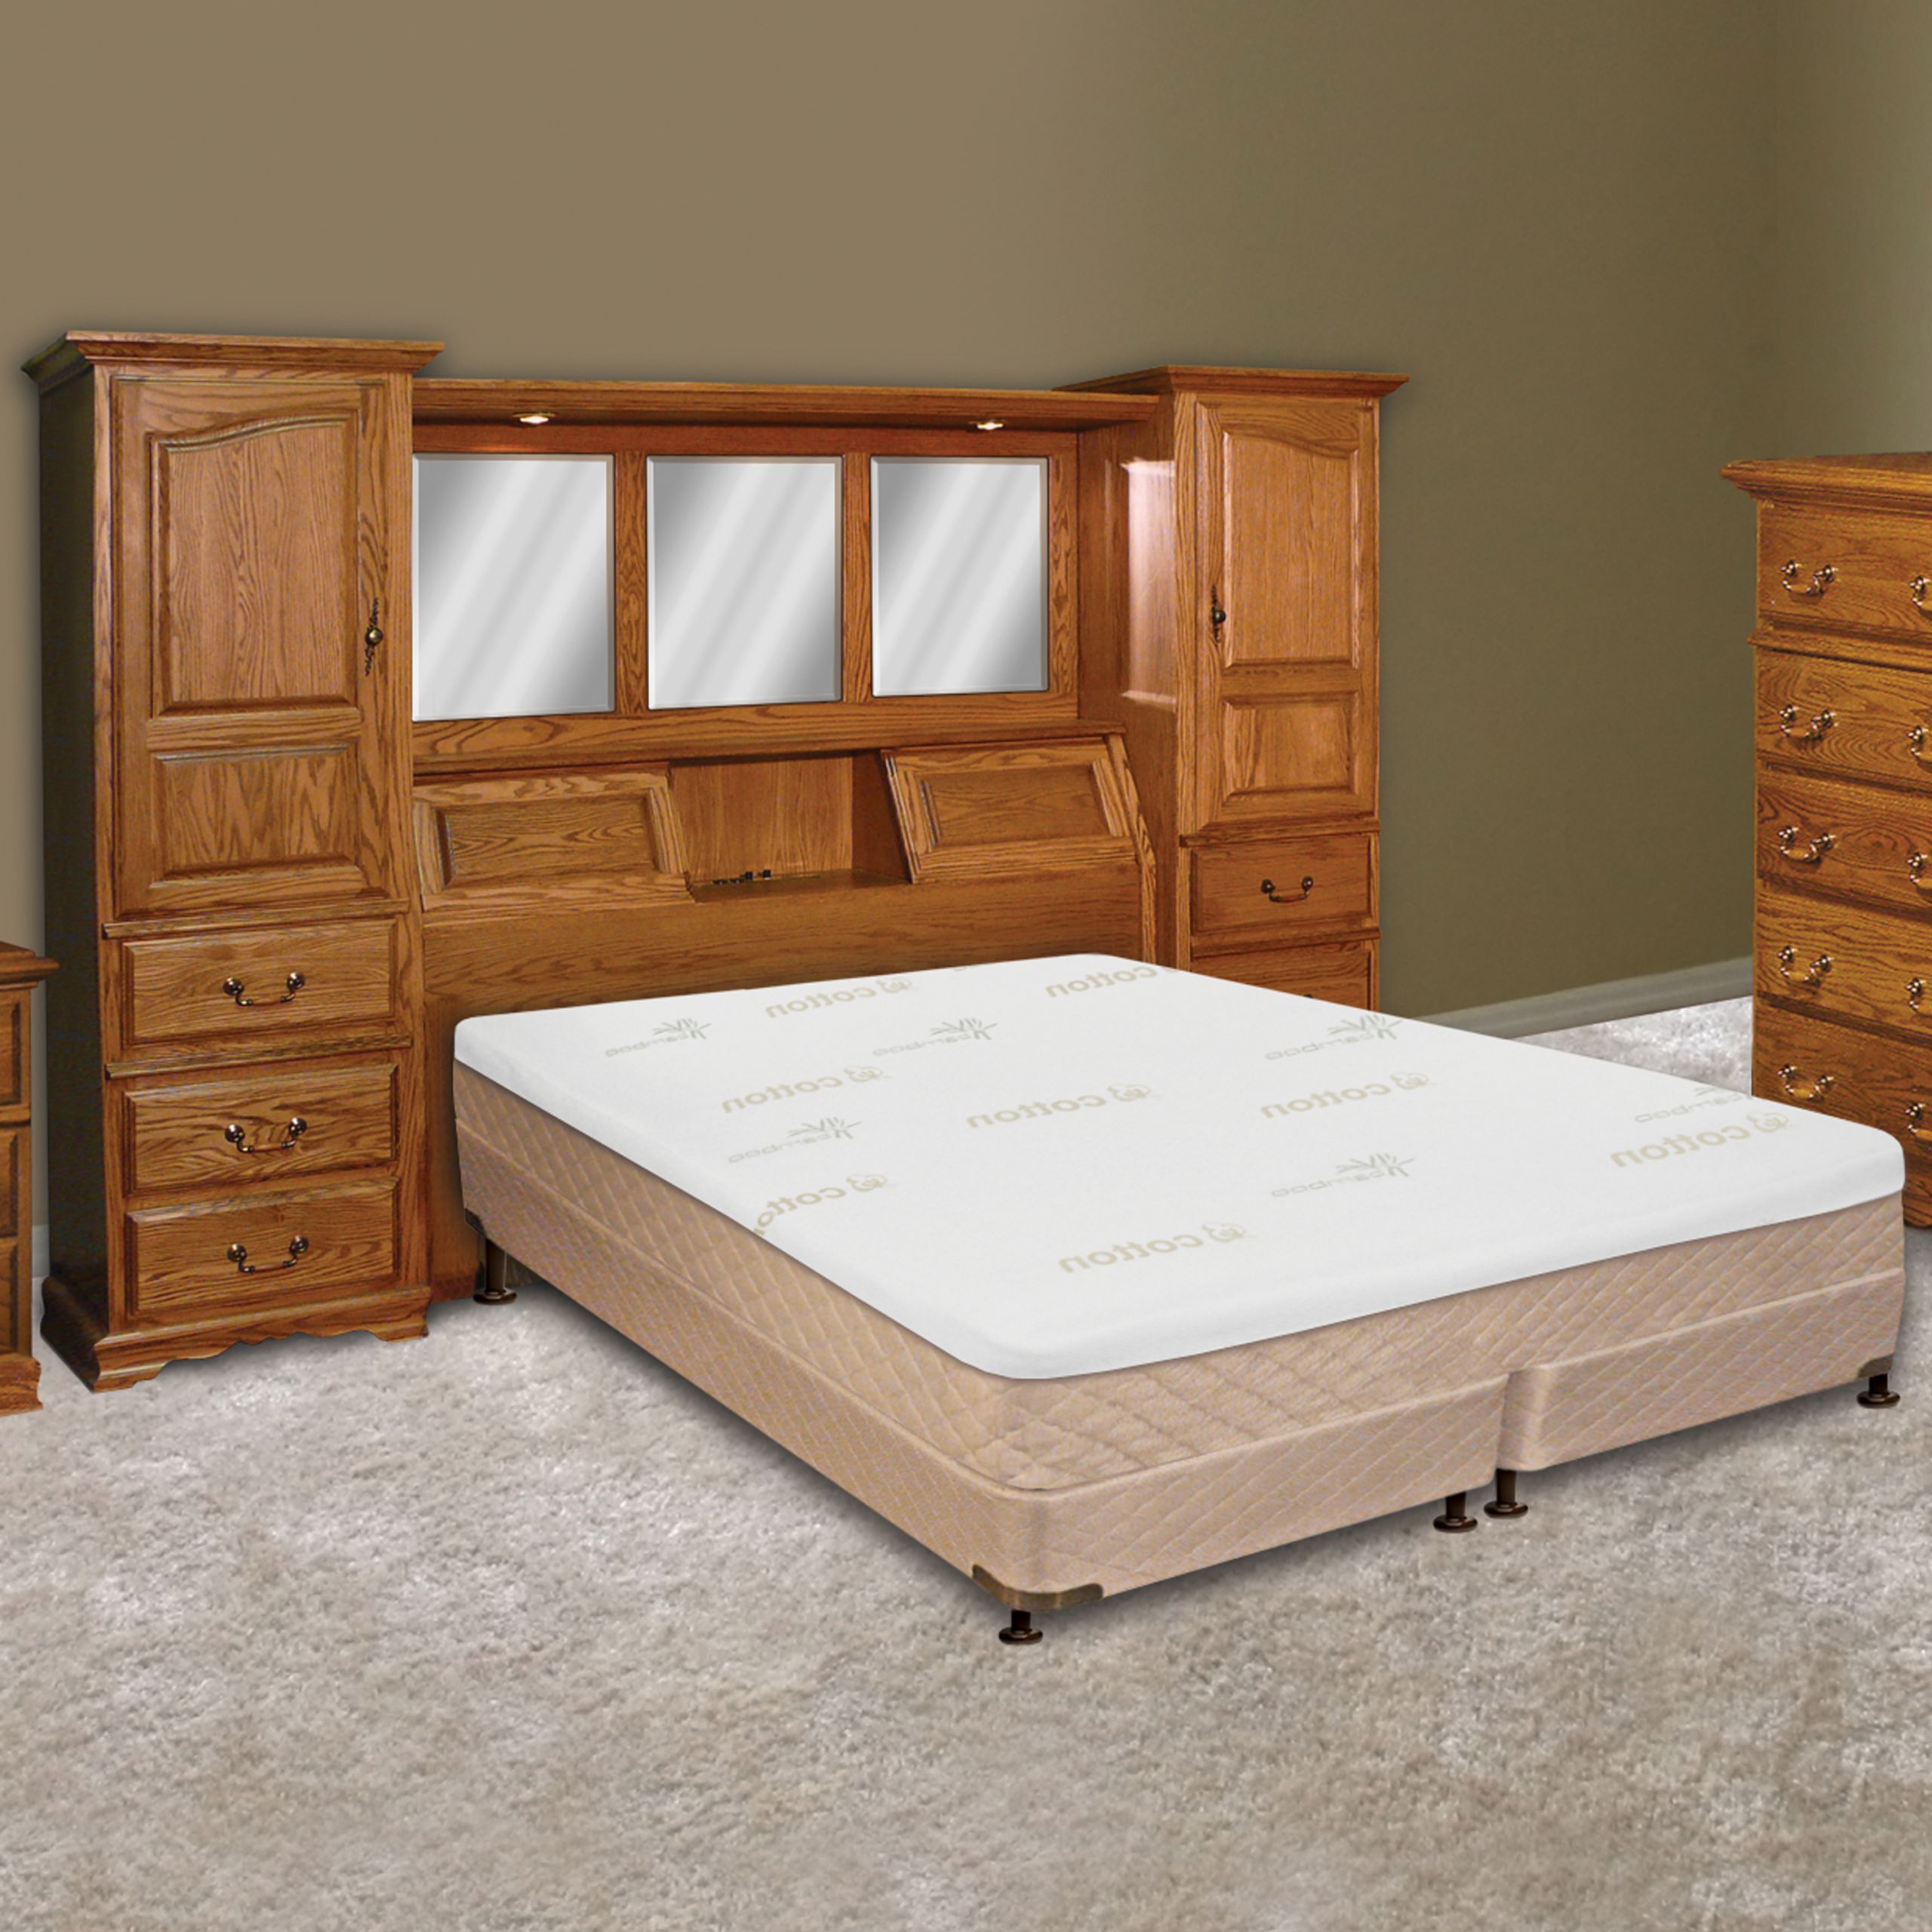 Wall Unit Bedroom Furniture
 Venetian Wall Unit & Casepieces InnoMax